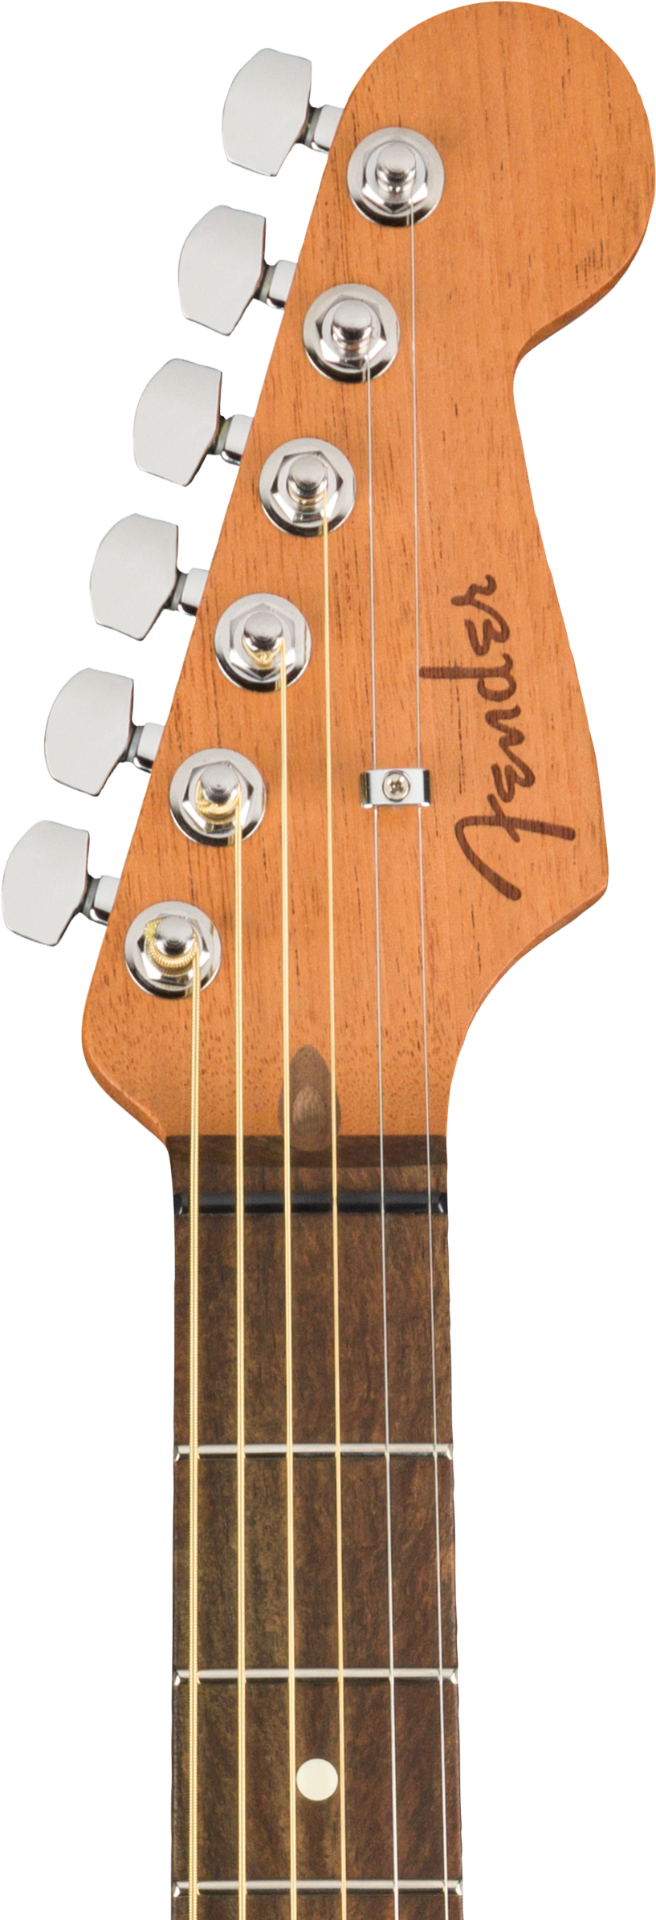 Fender Acoustisonic Stratocaster Acoustic Electric Guitar in 3 Tone Sunburst